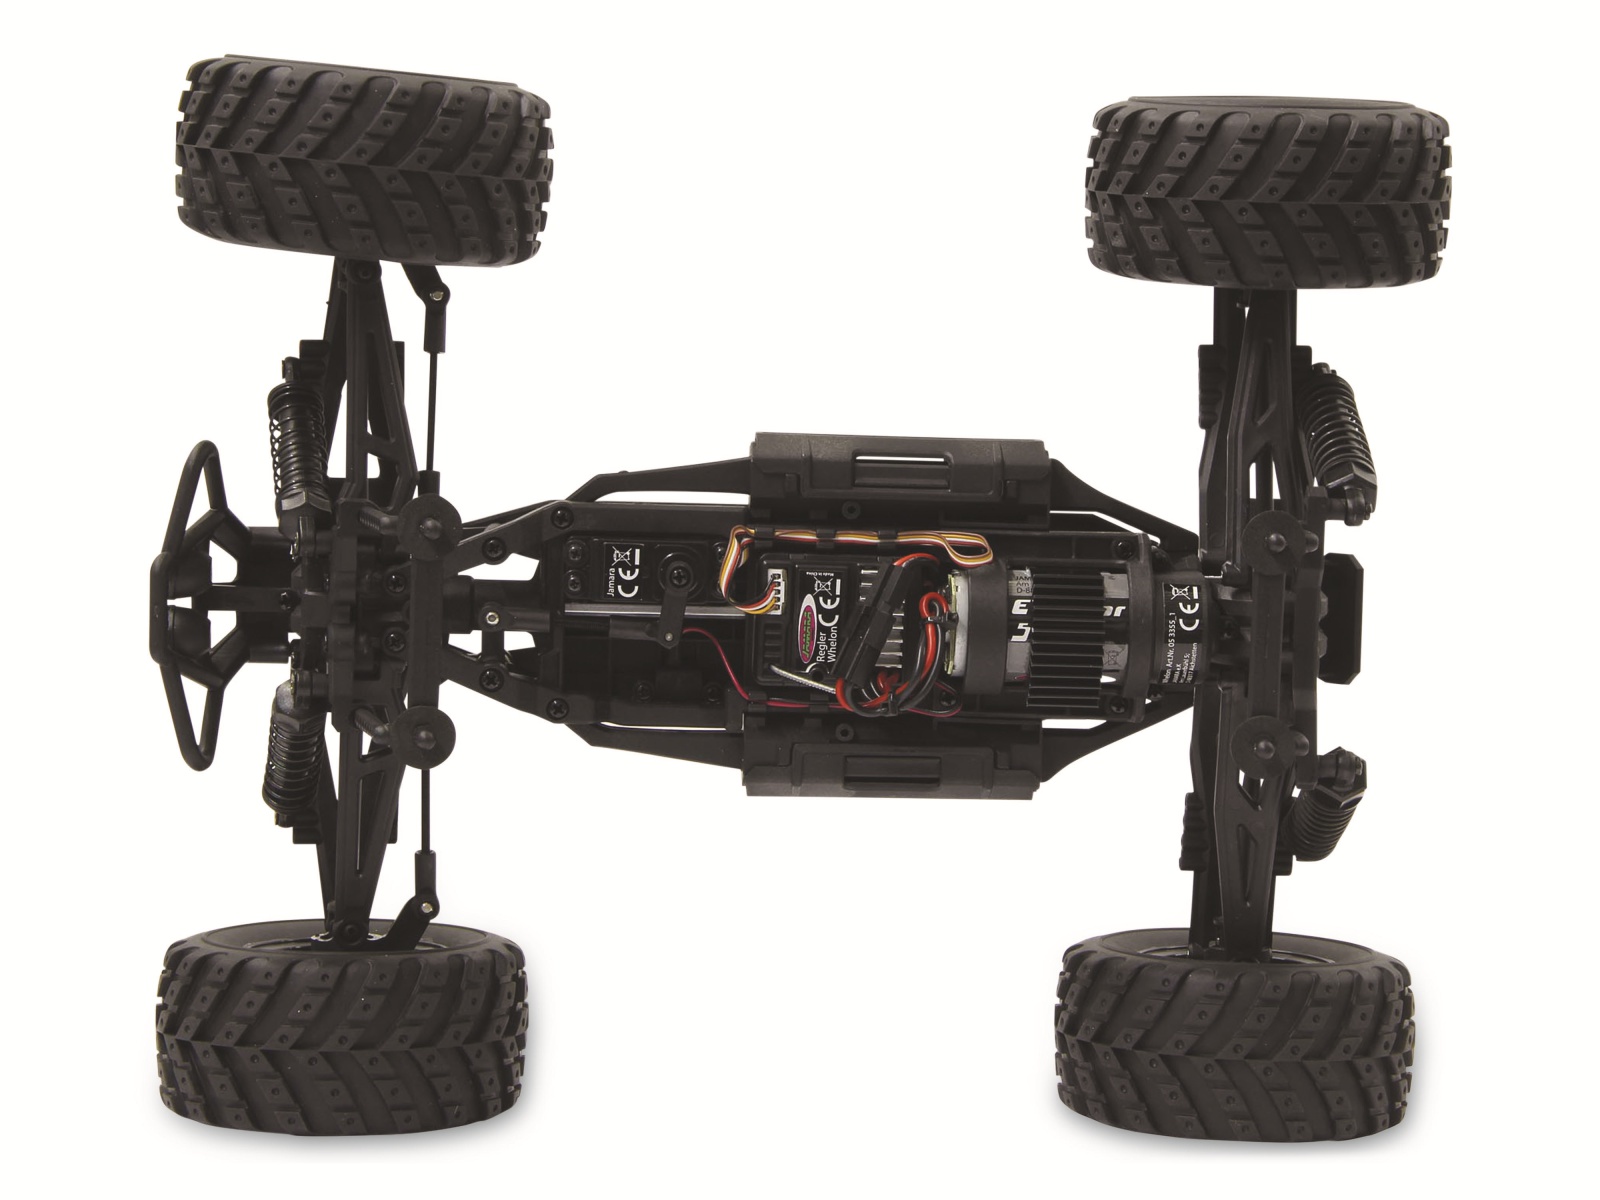 Jamara Monstertruck Whelon, 4WD, 1:12, Li-Ion-Akku, 2,4 GHz